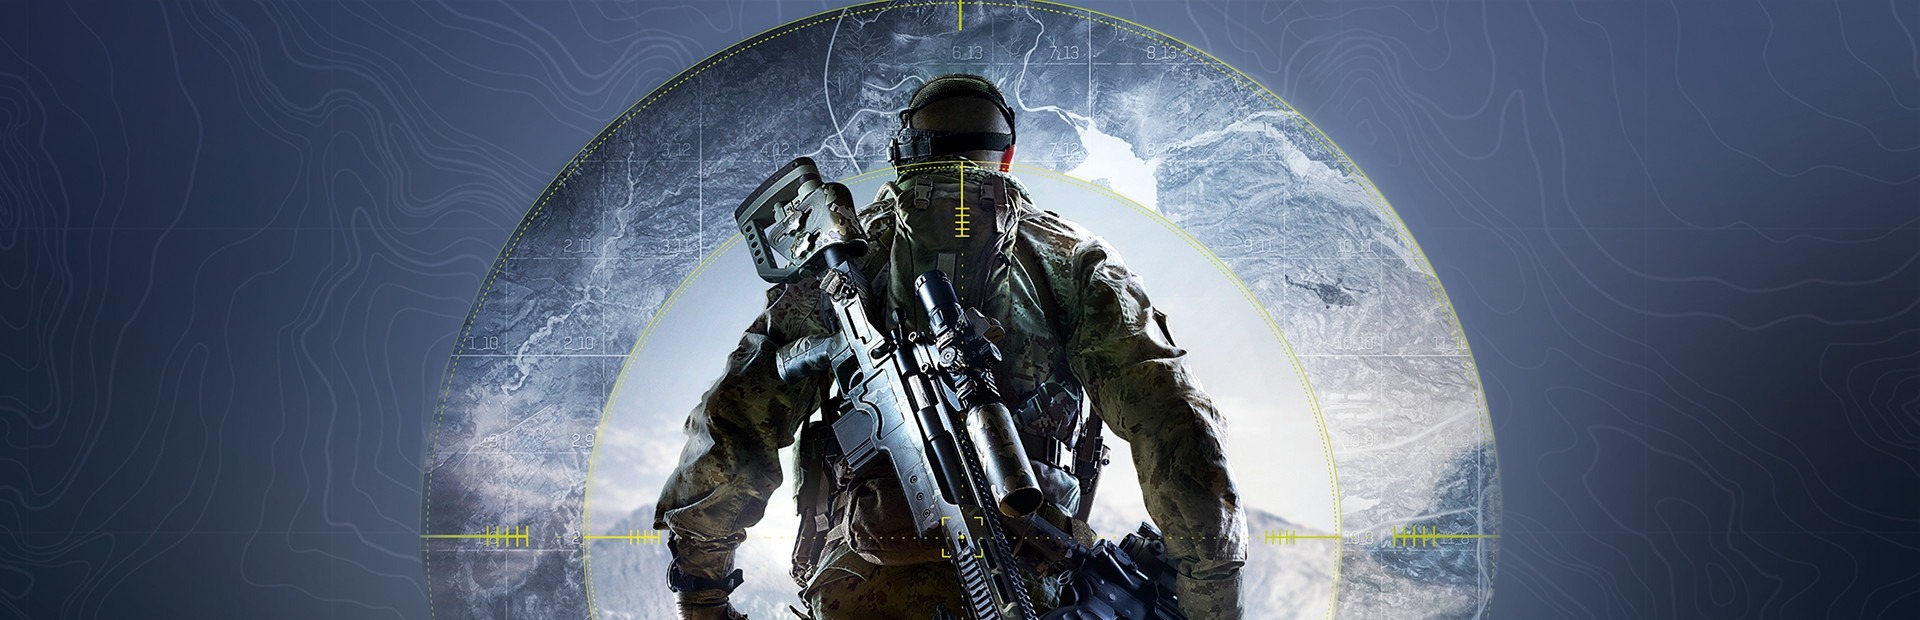 Sniper: Ghost Warrior 3 Season Pass Edition